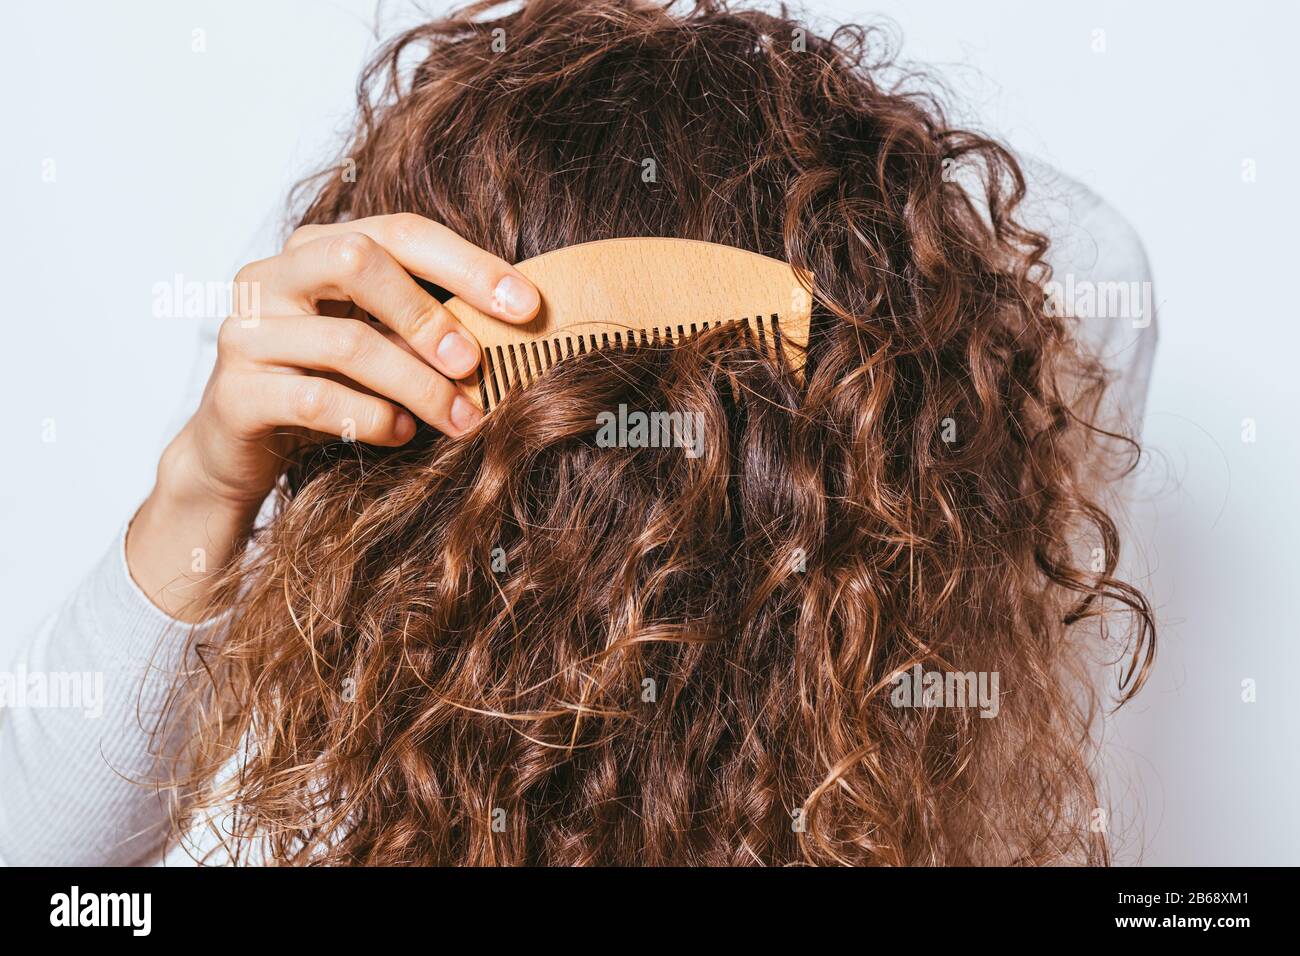 Nahaufnahme junge Frau kämmt ihr gesundes dickes lockiges Haar mit Holzkamm. Stockfoto